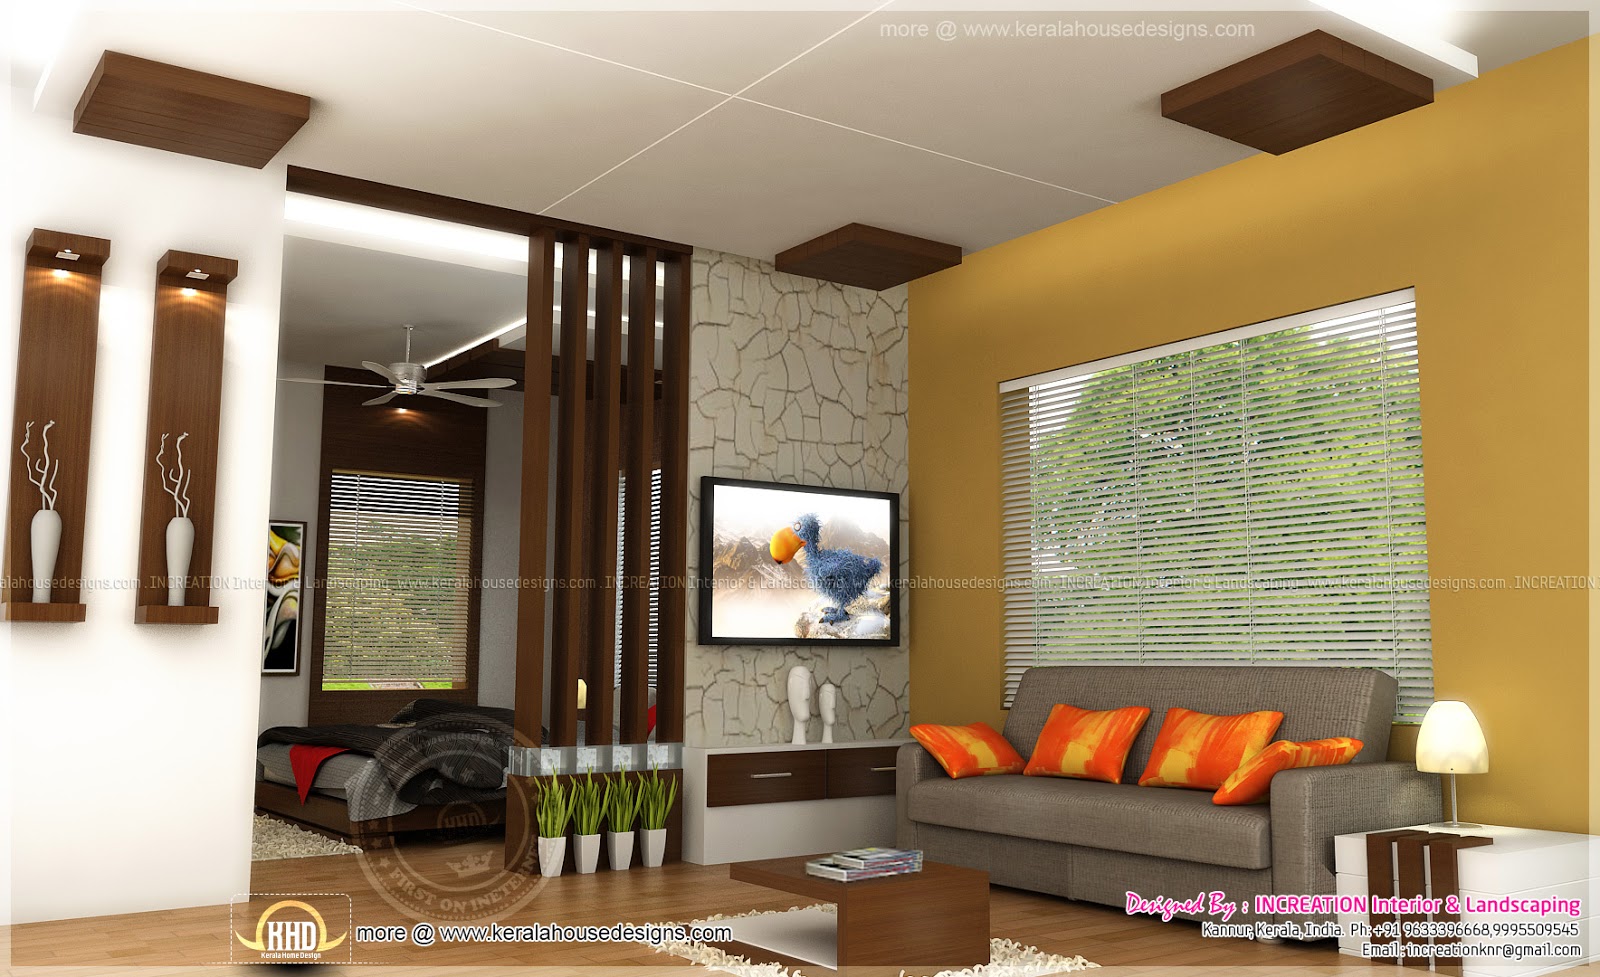 Interior designs from Kannur, Kerala - Kerala home design and floor plans